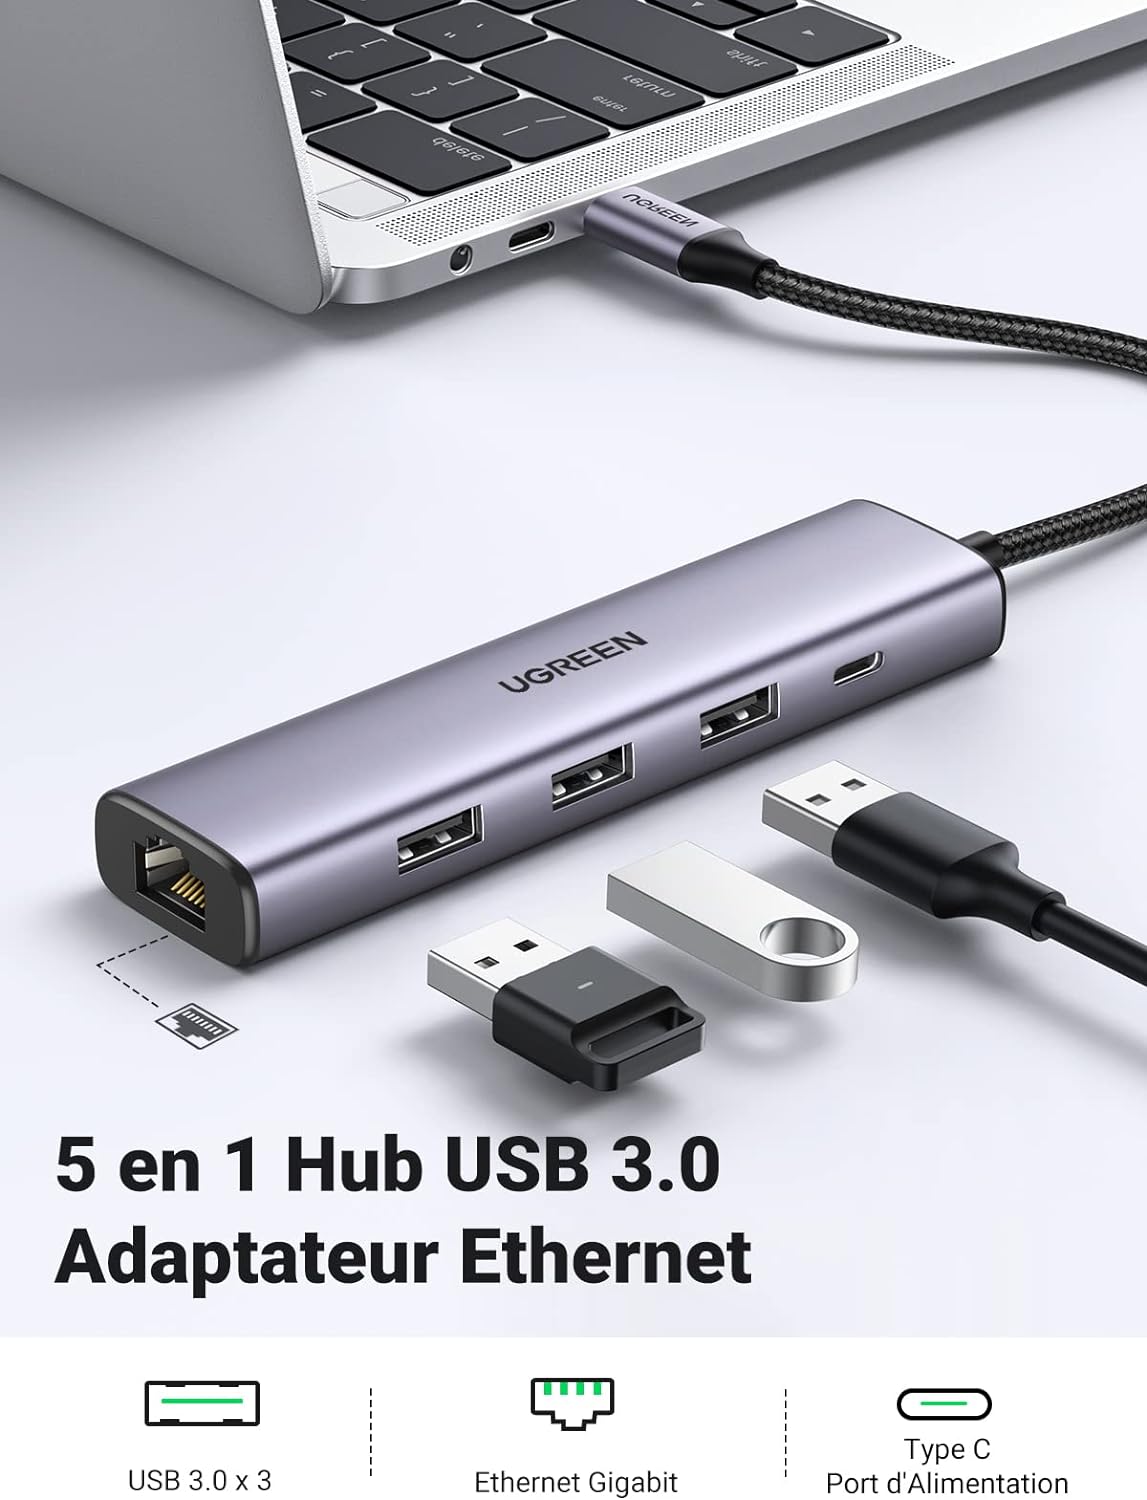 Adaptateur (Hub) USB 3.0 vers 3 Ports USB 3.0, RJ45 Réseau LAN Gigabit 1000Mbps et 1 port USB-C – UGREEN 2